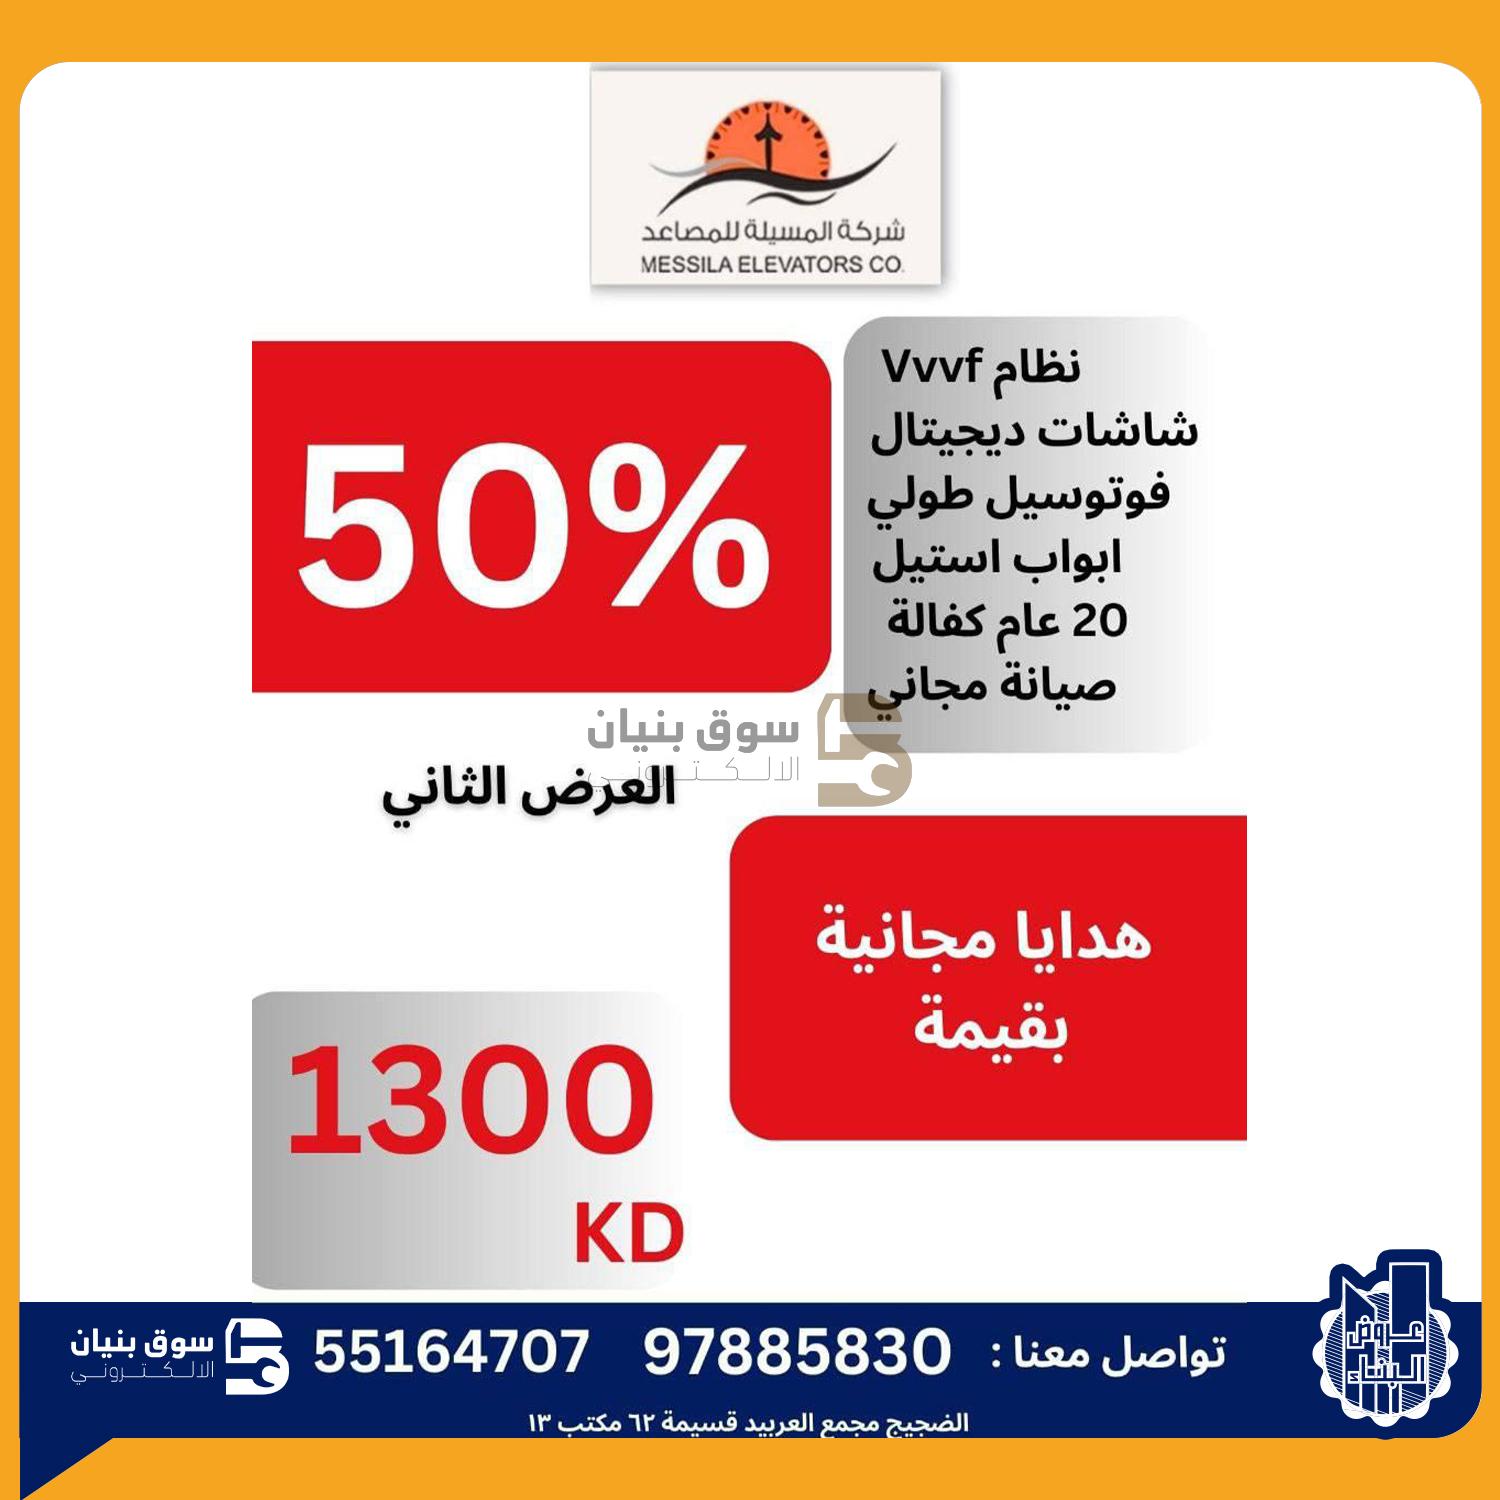 50% discount from Al-Masila Elevator Company